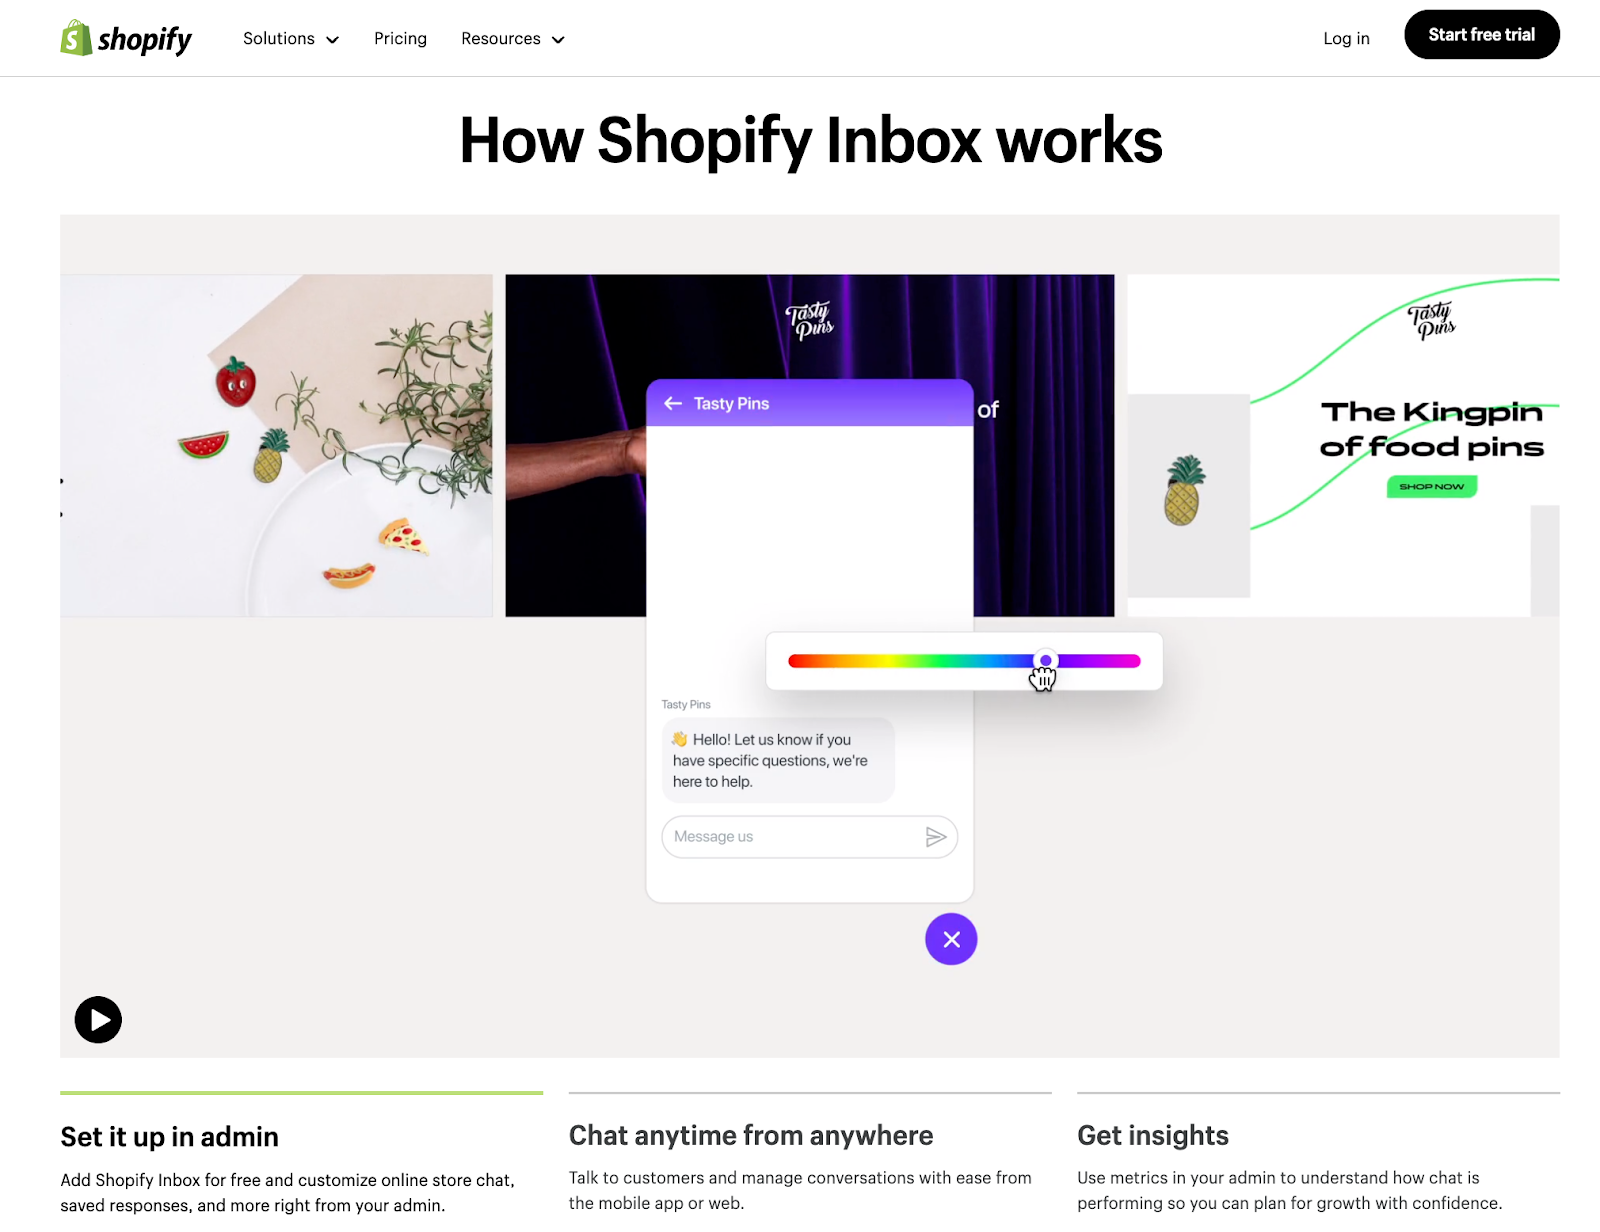 Shopify inbox